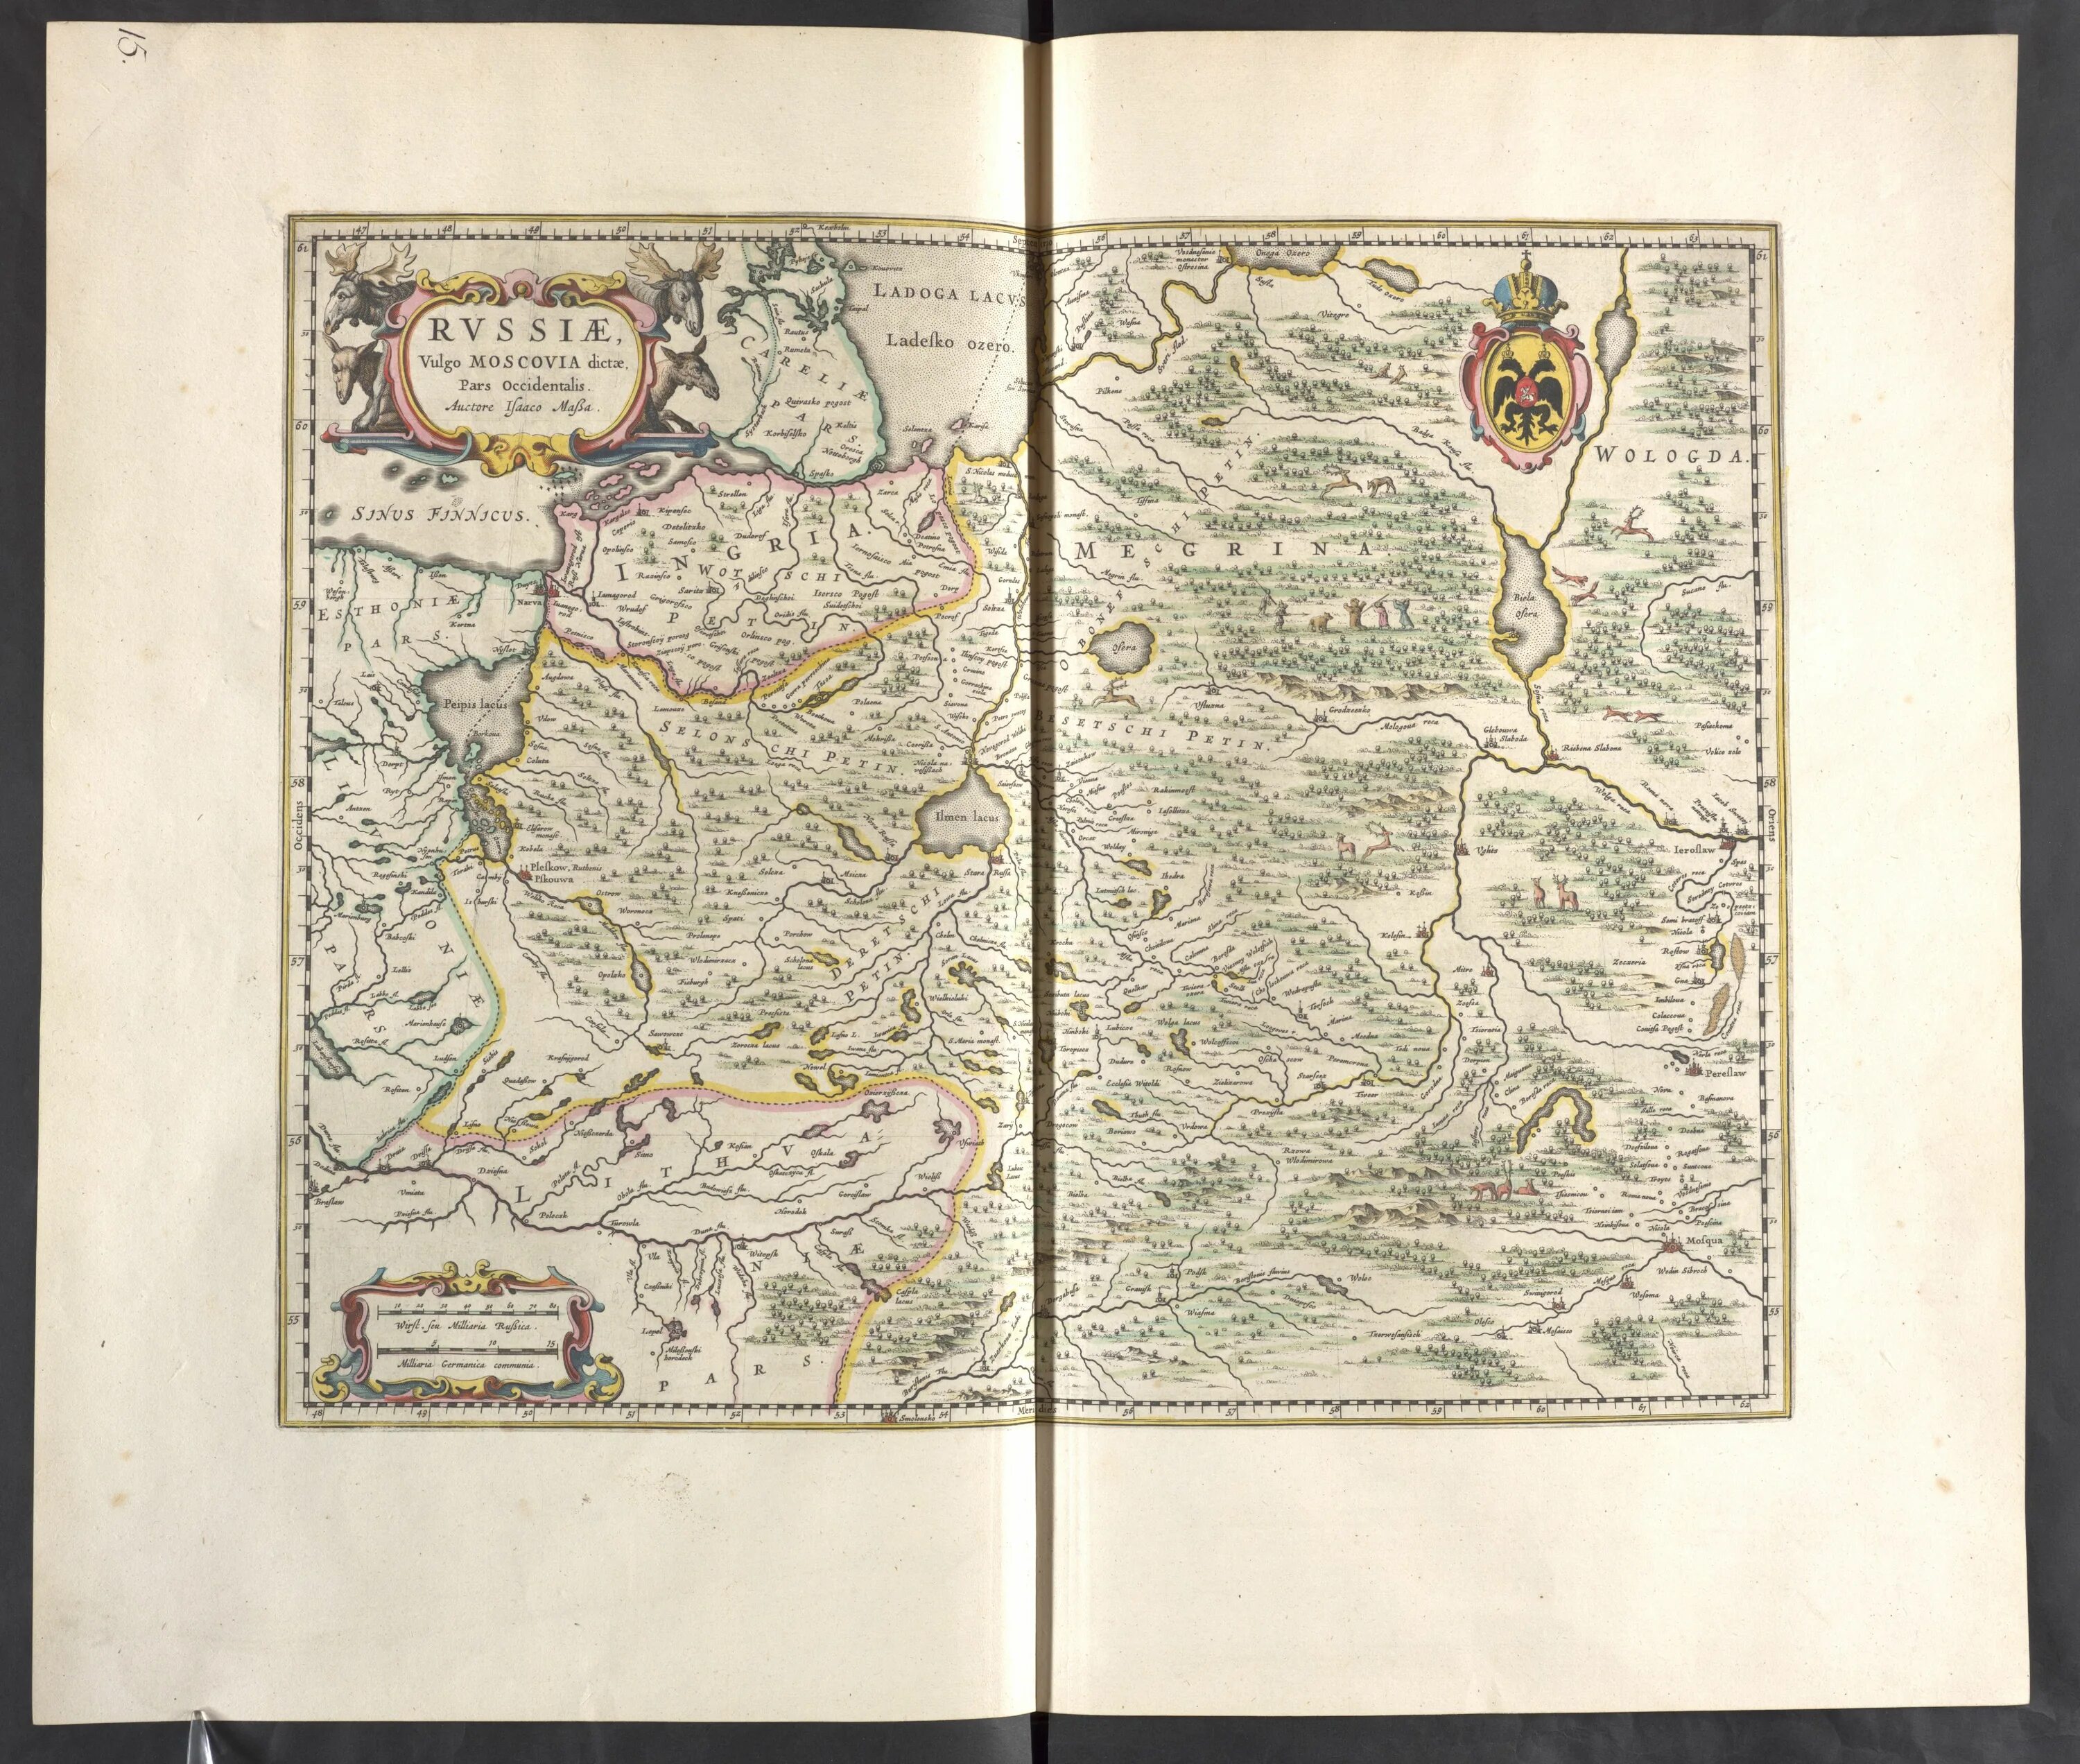 Антоний вид. [Moscovia] - Вильно, 1555 г. [Ефимов 1964]. Russiaæ vulgo Moscovia, Atlas maior, 1645. Карты 15 50